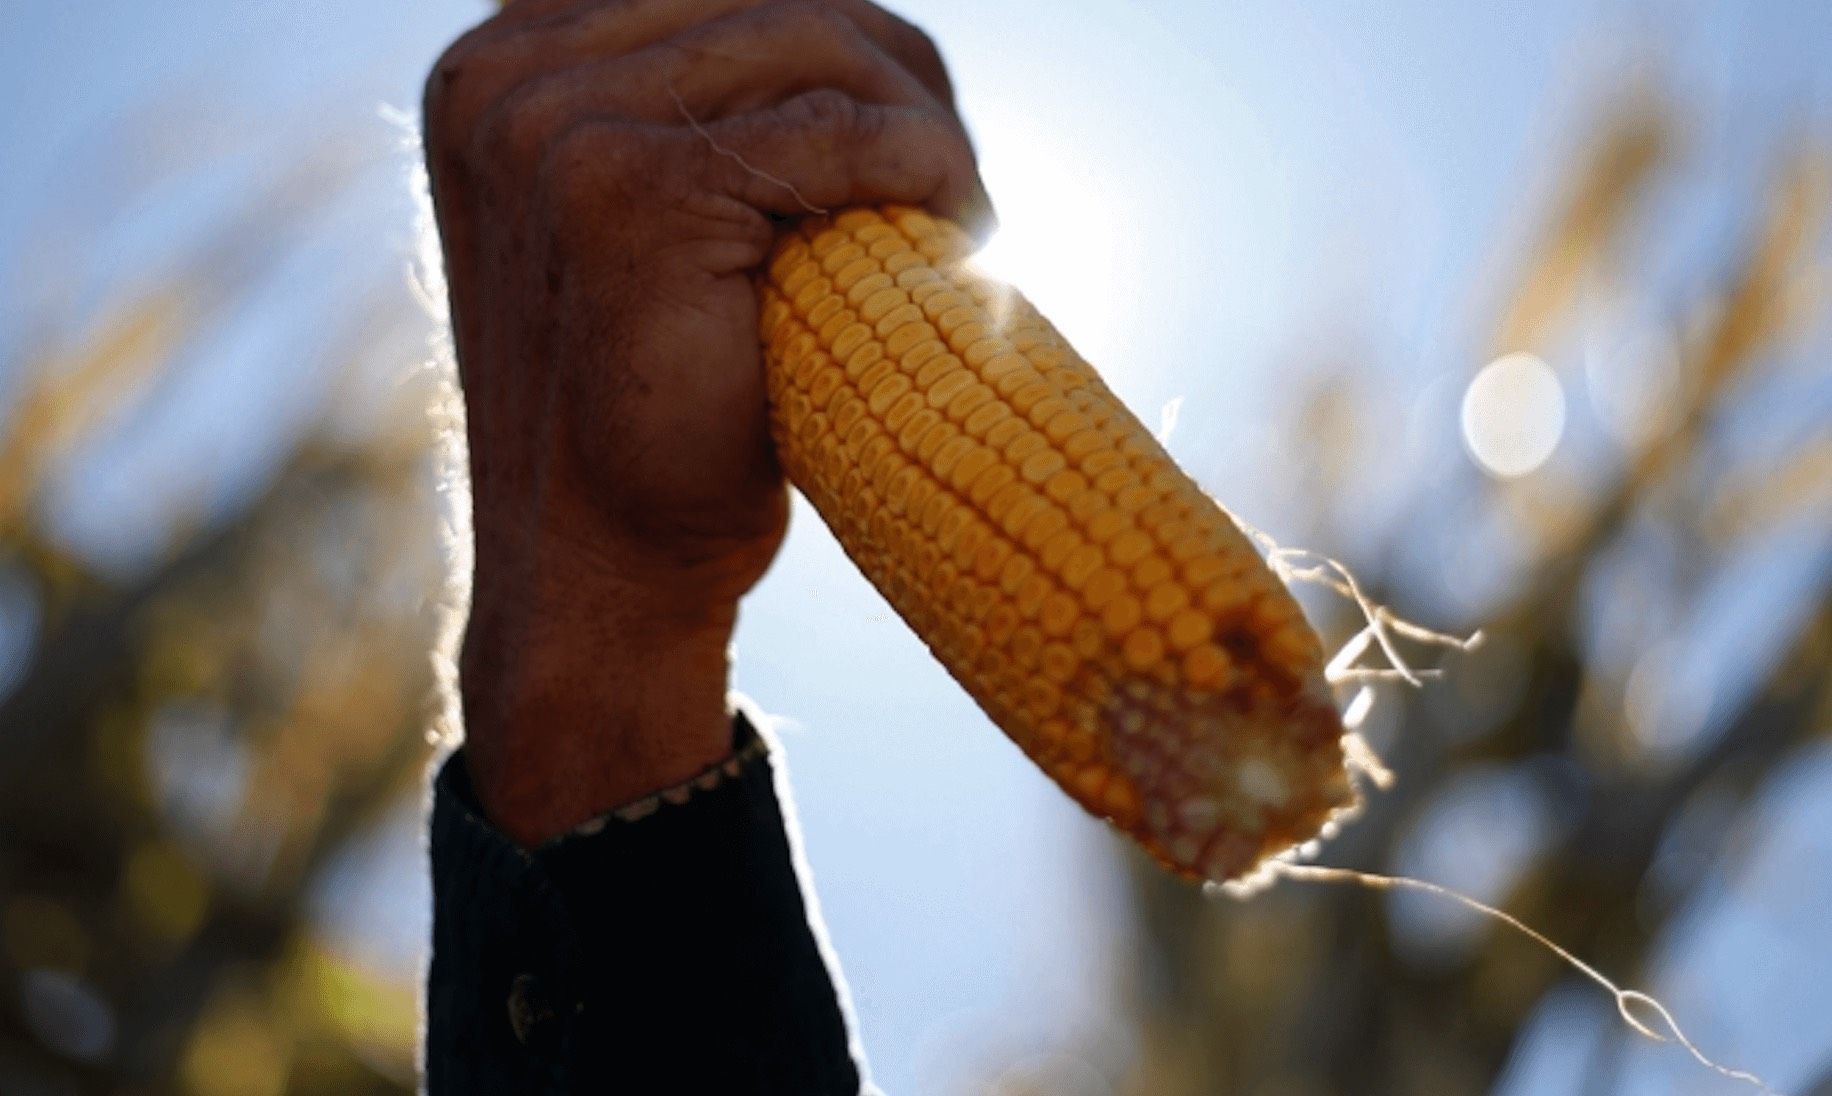 Кукуруза сбор урожая. Огромный початок кукурузы. Початок кукурузы в руке. Мужик с кукурузой. Человек кукурузный початок.